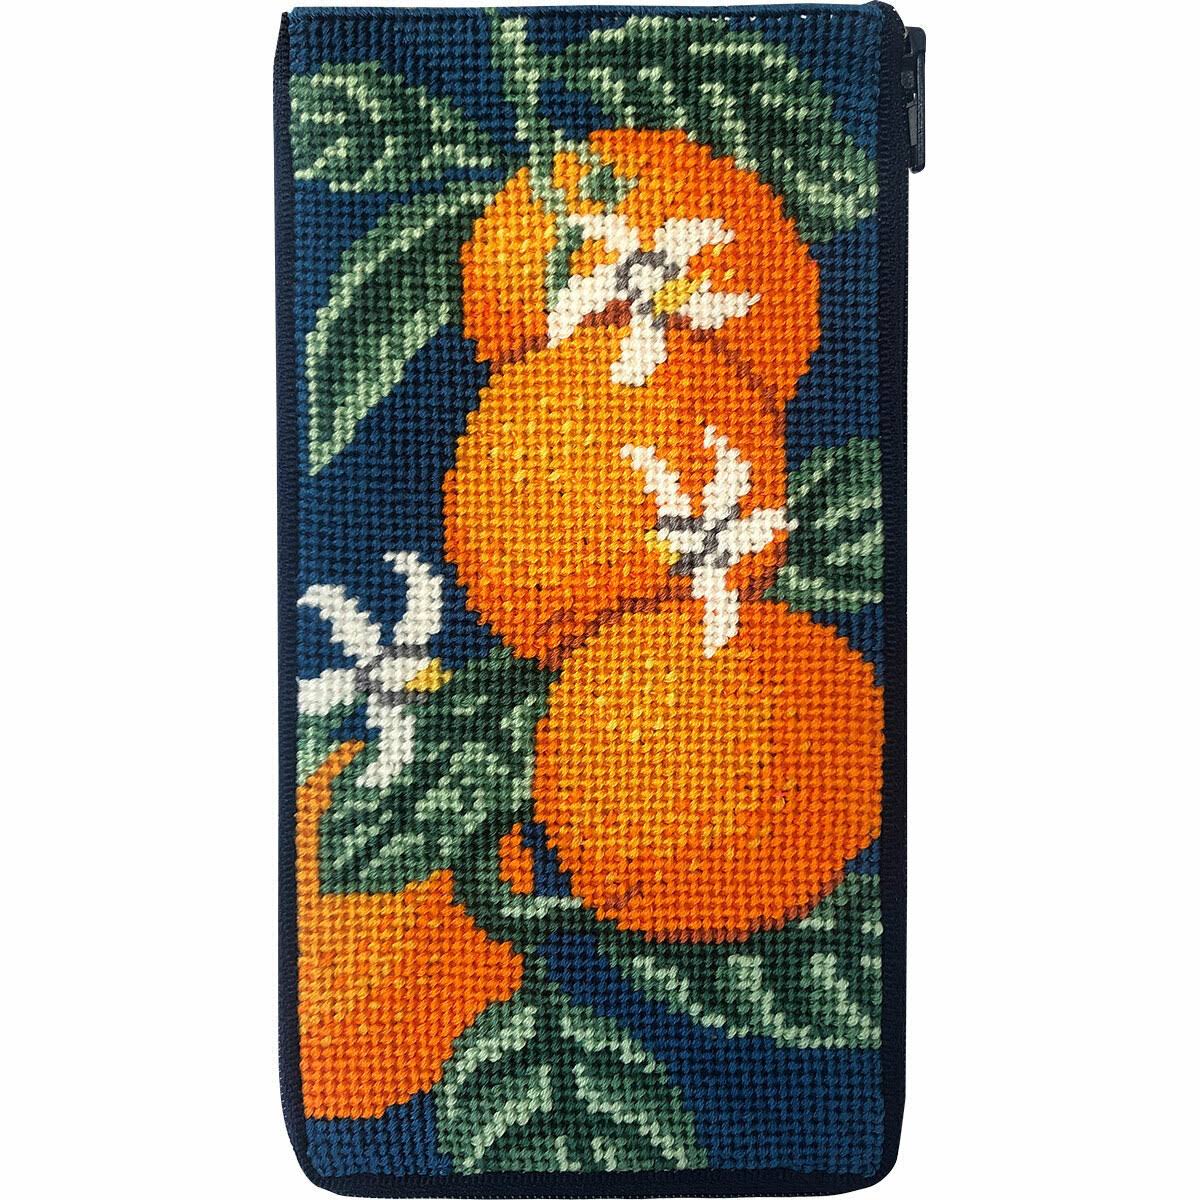 Alice Peterson Stitch & Zip Eyeglass Case Needlepoint Kit- Oranges